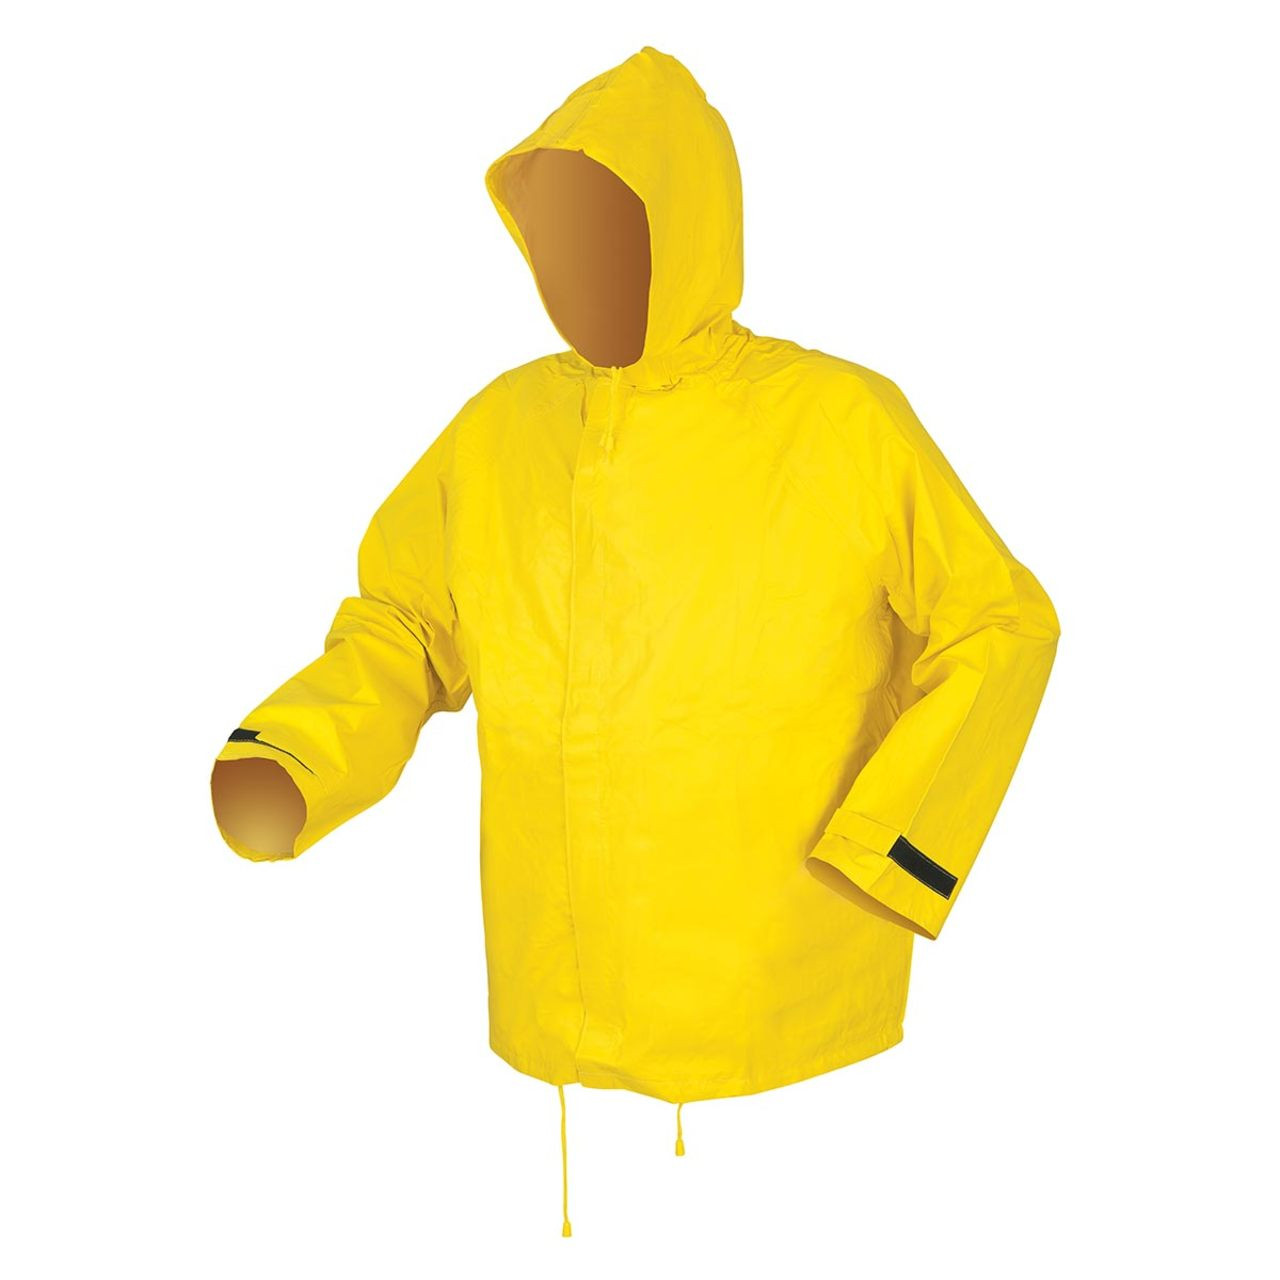 Rainwear | Discount Safety Gear - Shop Now!